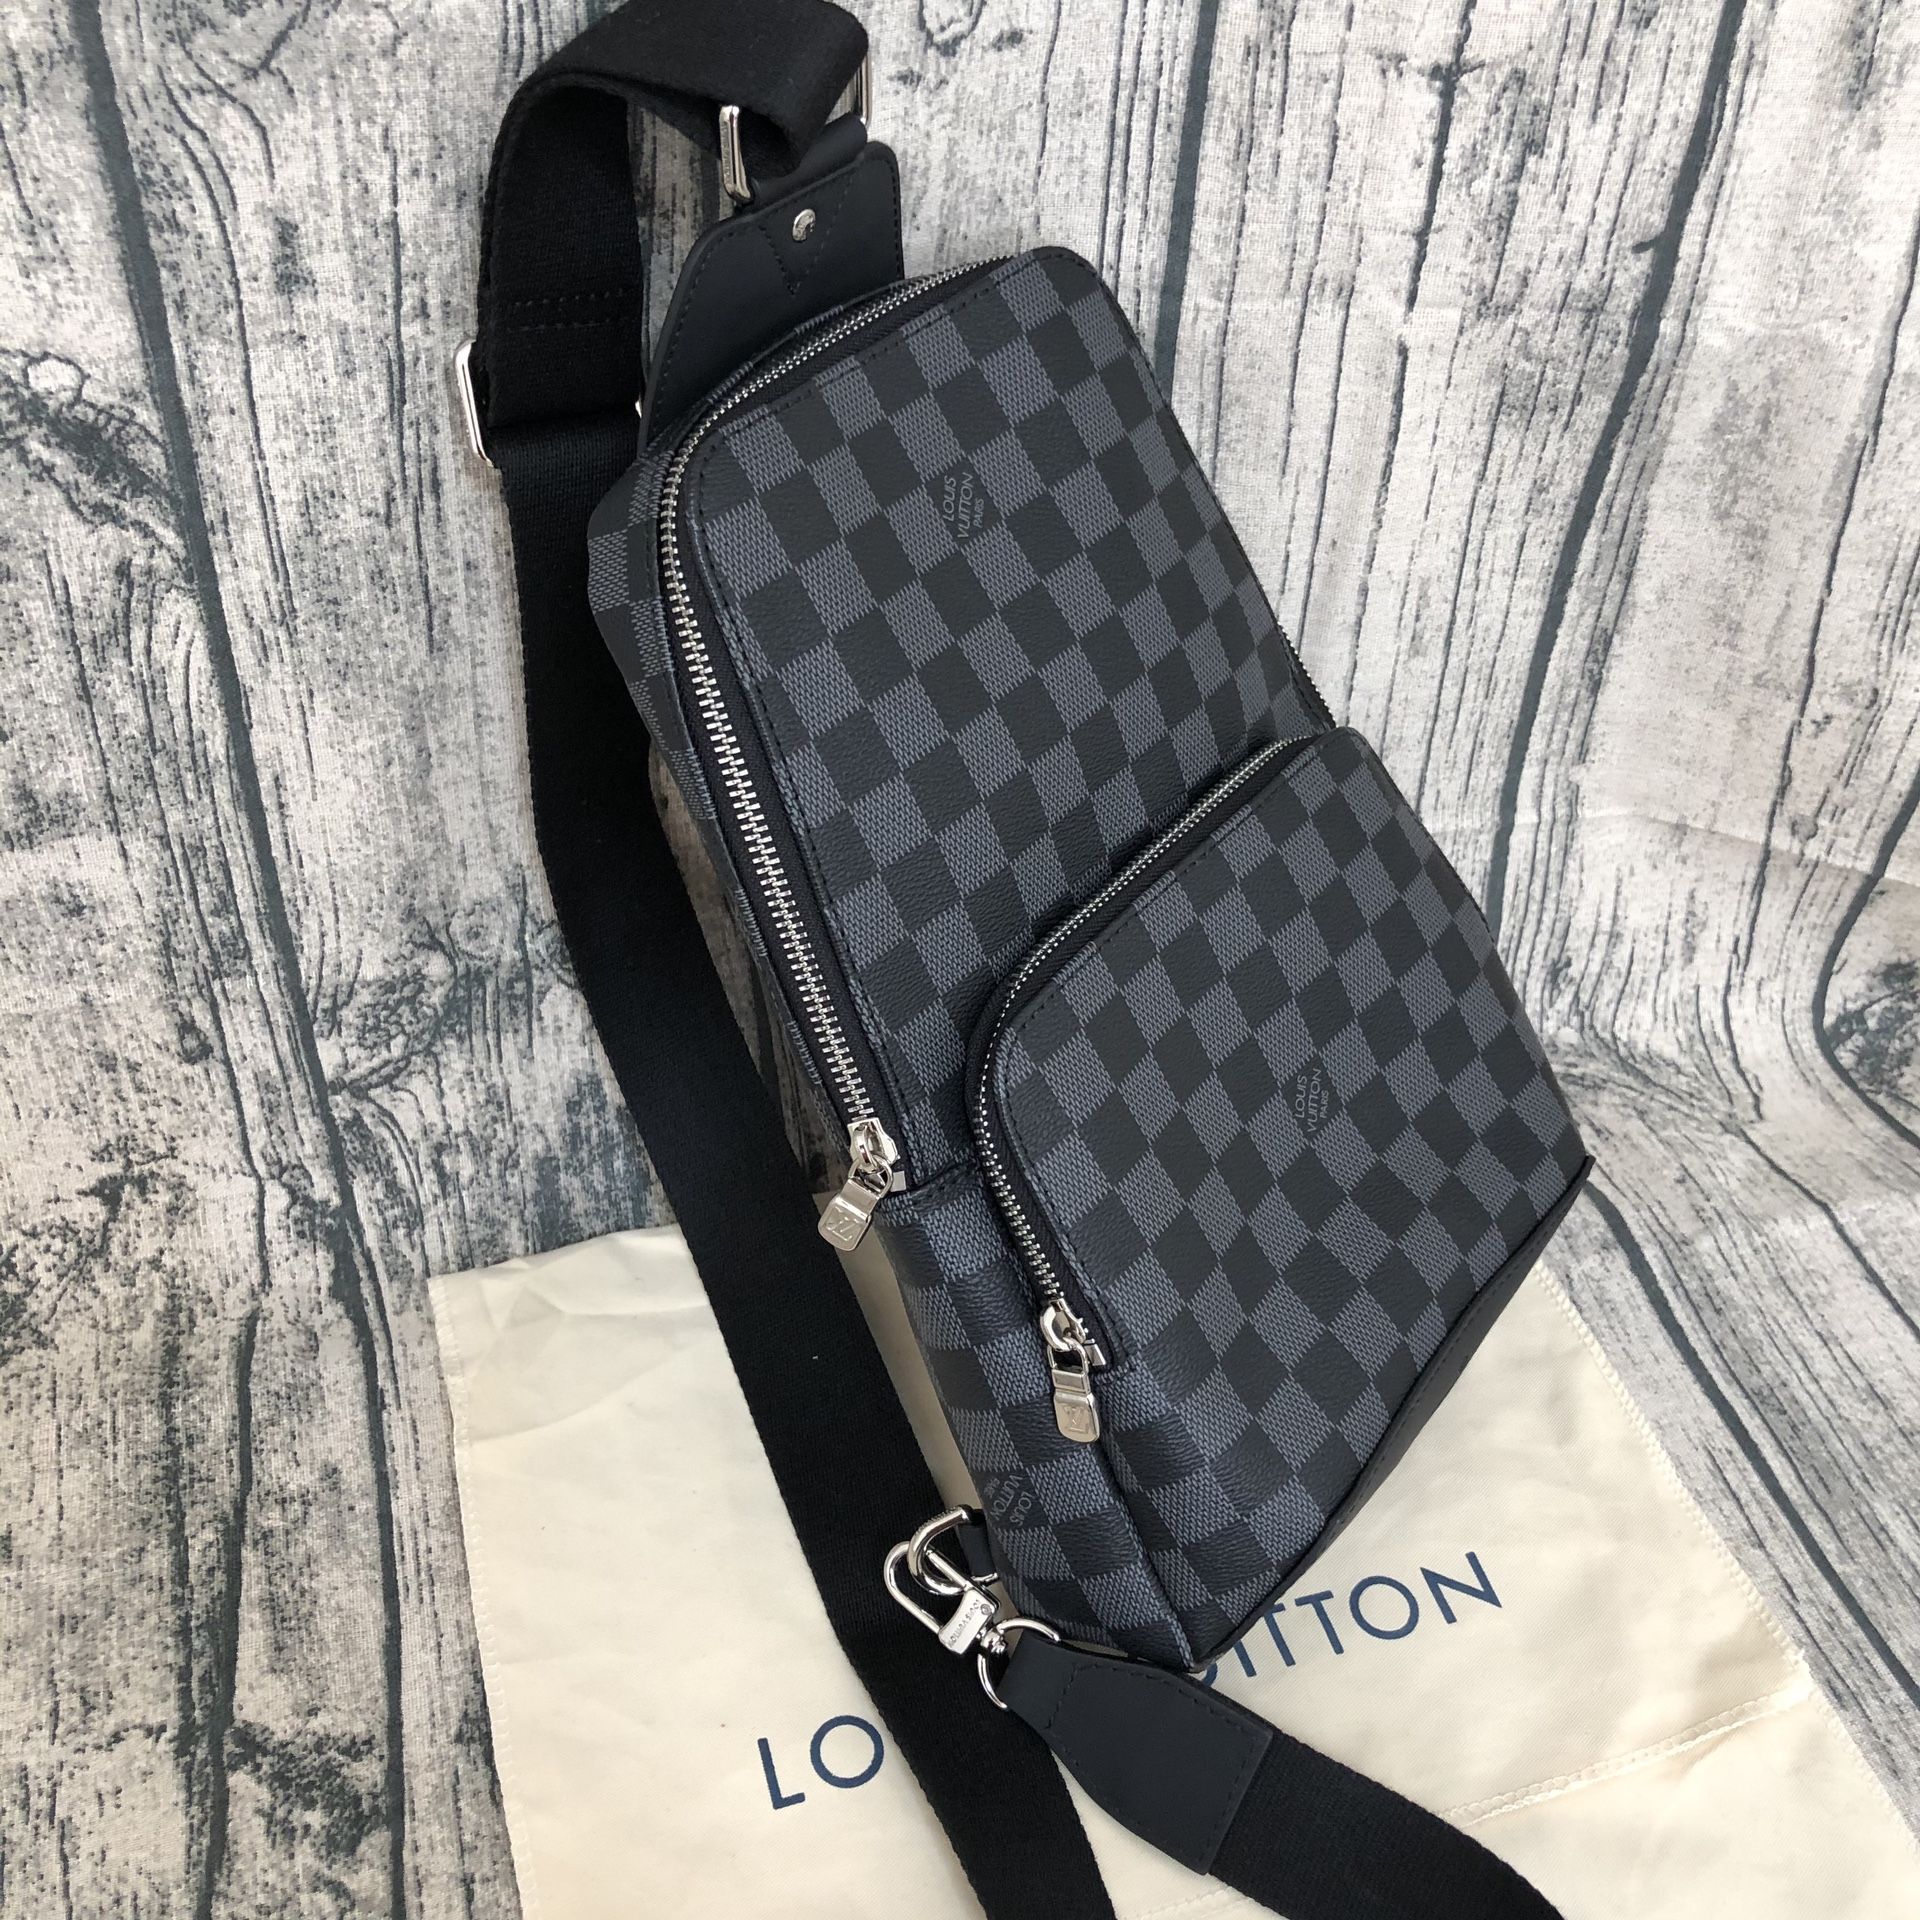 Buy Louis Vuitton Avenue Sling Bag Men Backpacks (Damier Graphite